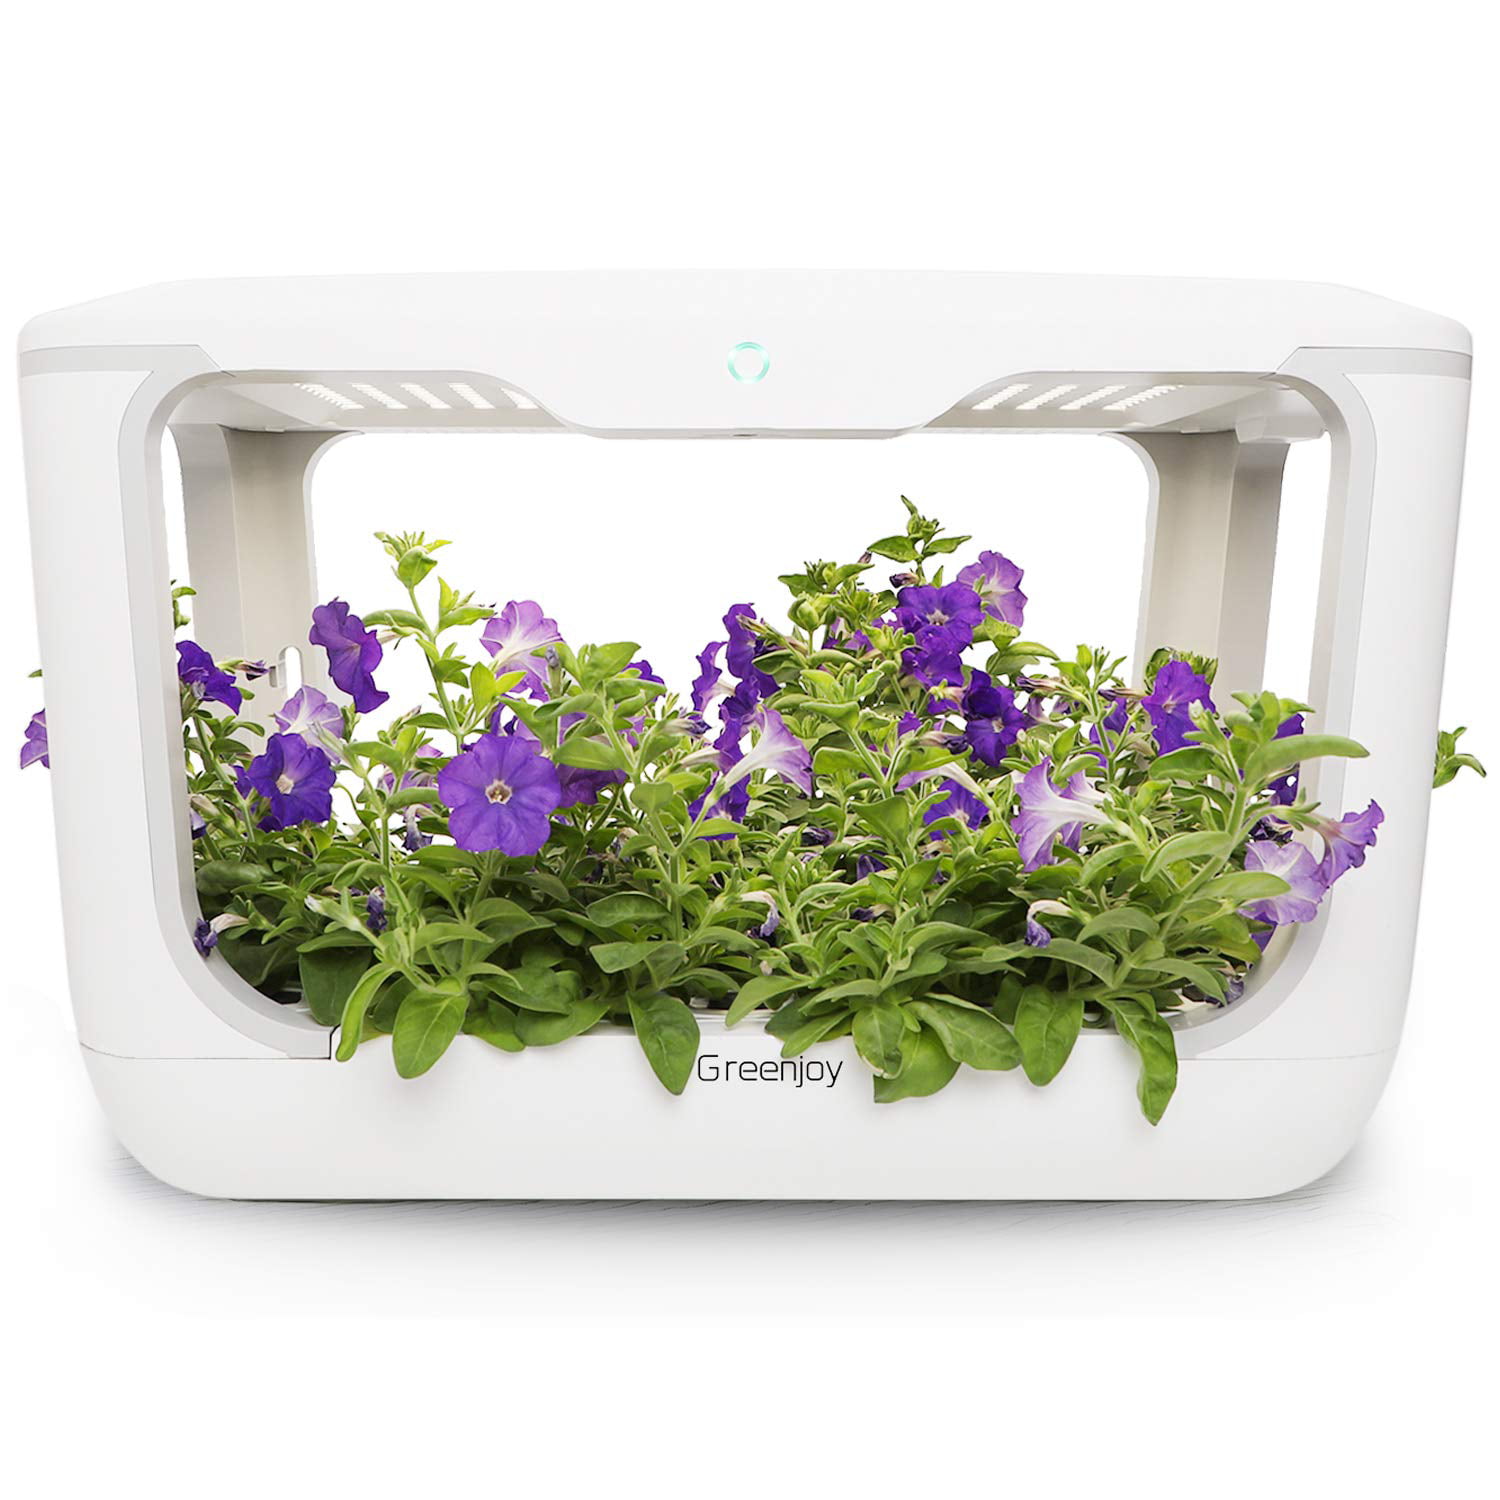 Greenjoy Indoor Herb Garden Kit, Hydroponics Growing System, Plant ...